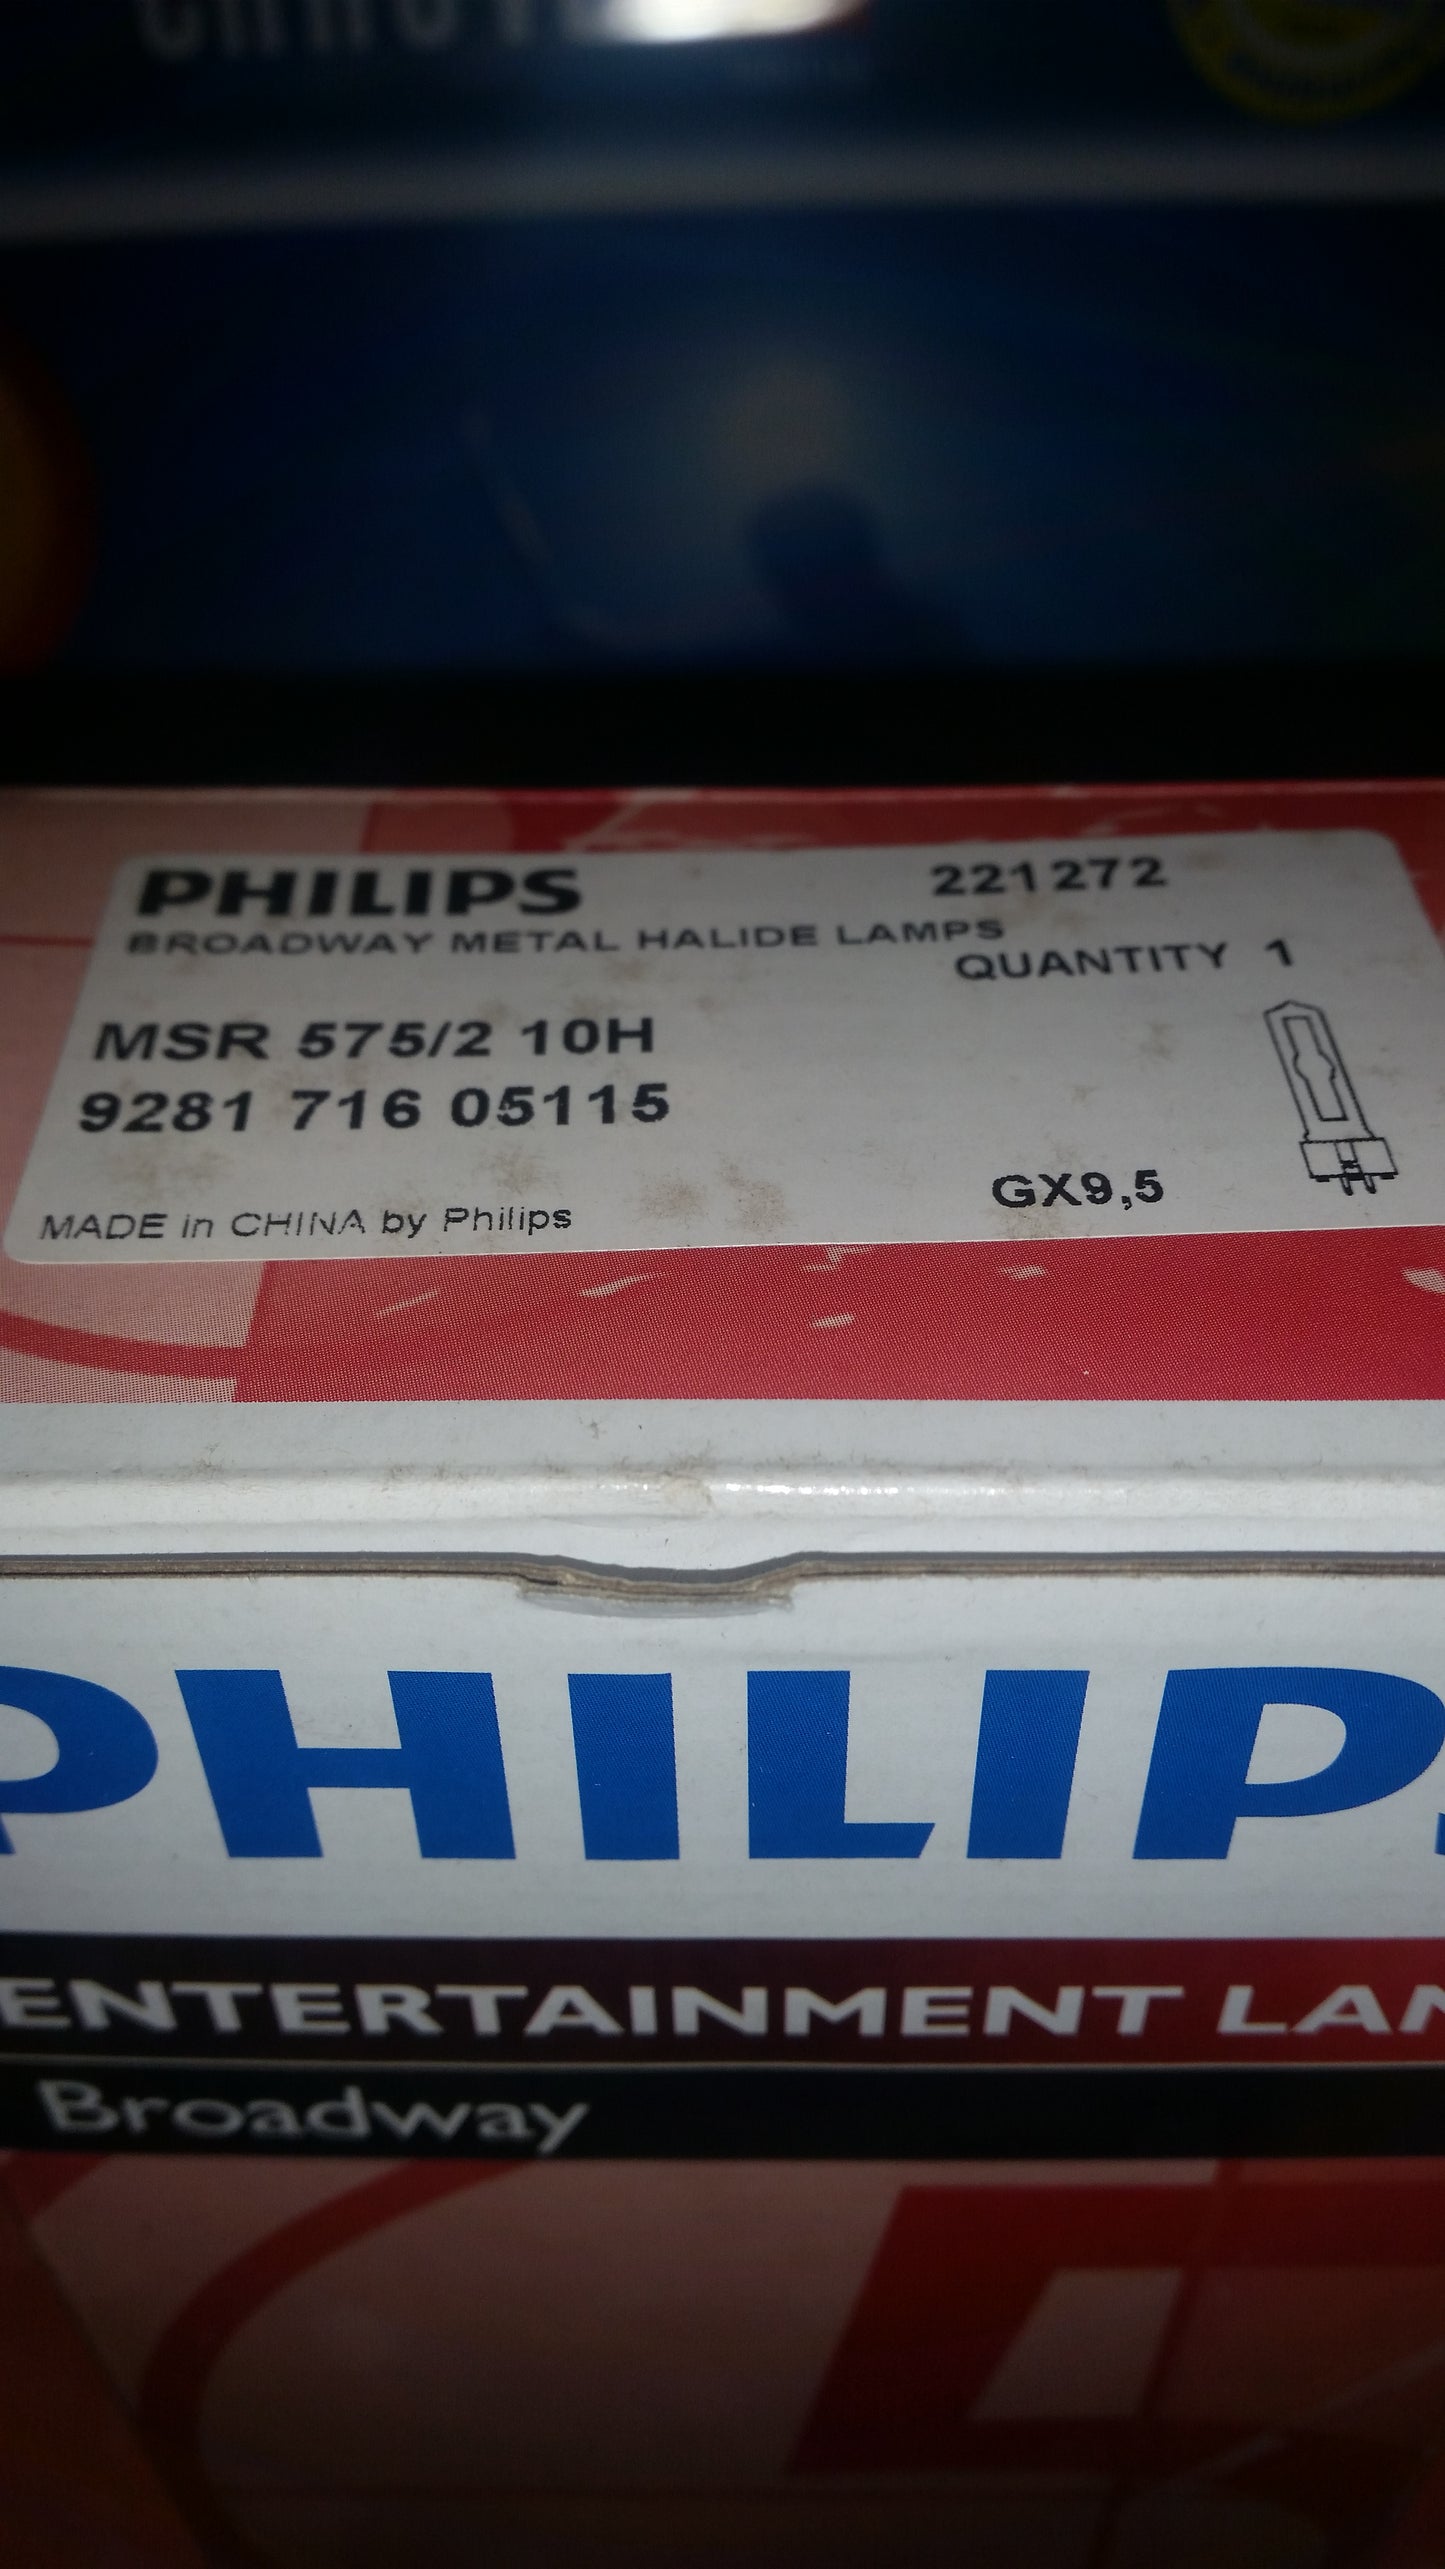 MSR 575/2 Philips